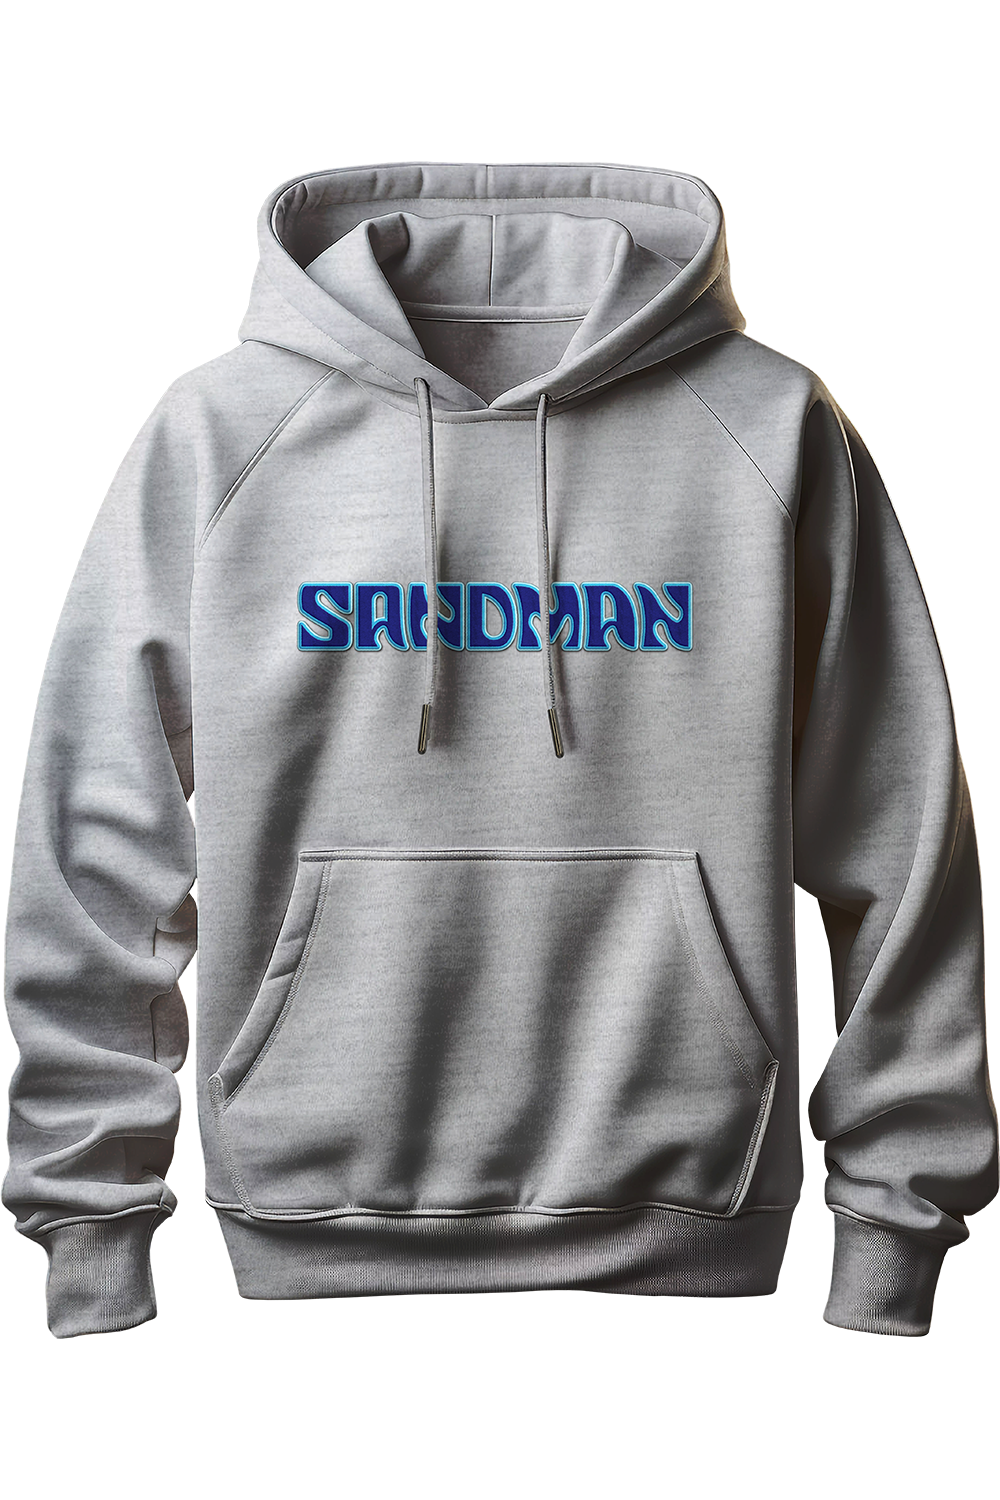 Sandman Supreme Hoodie - Blue Logo